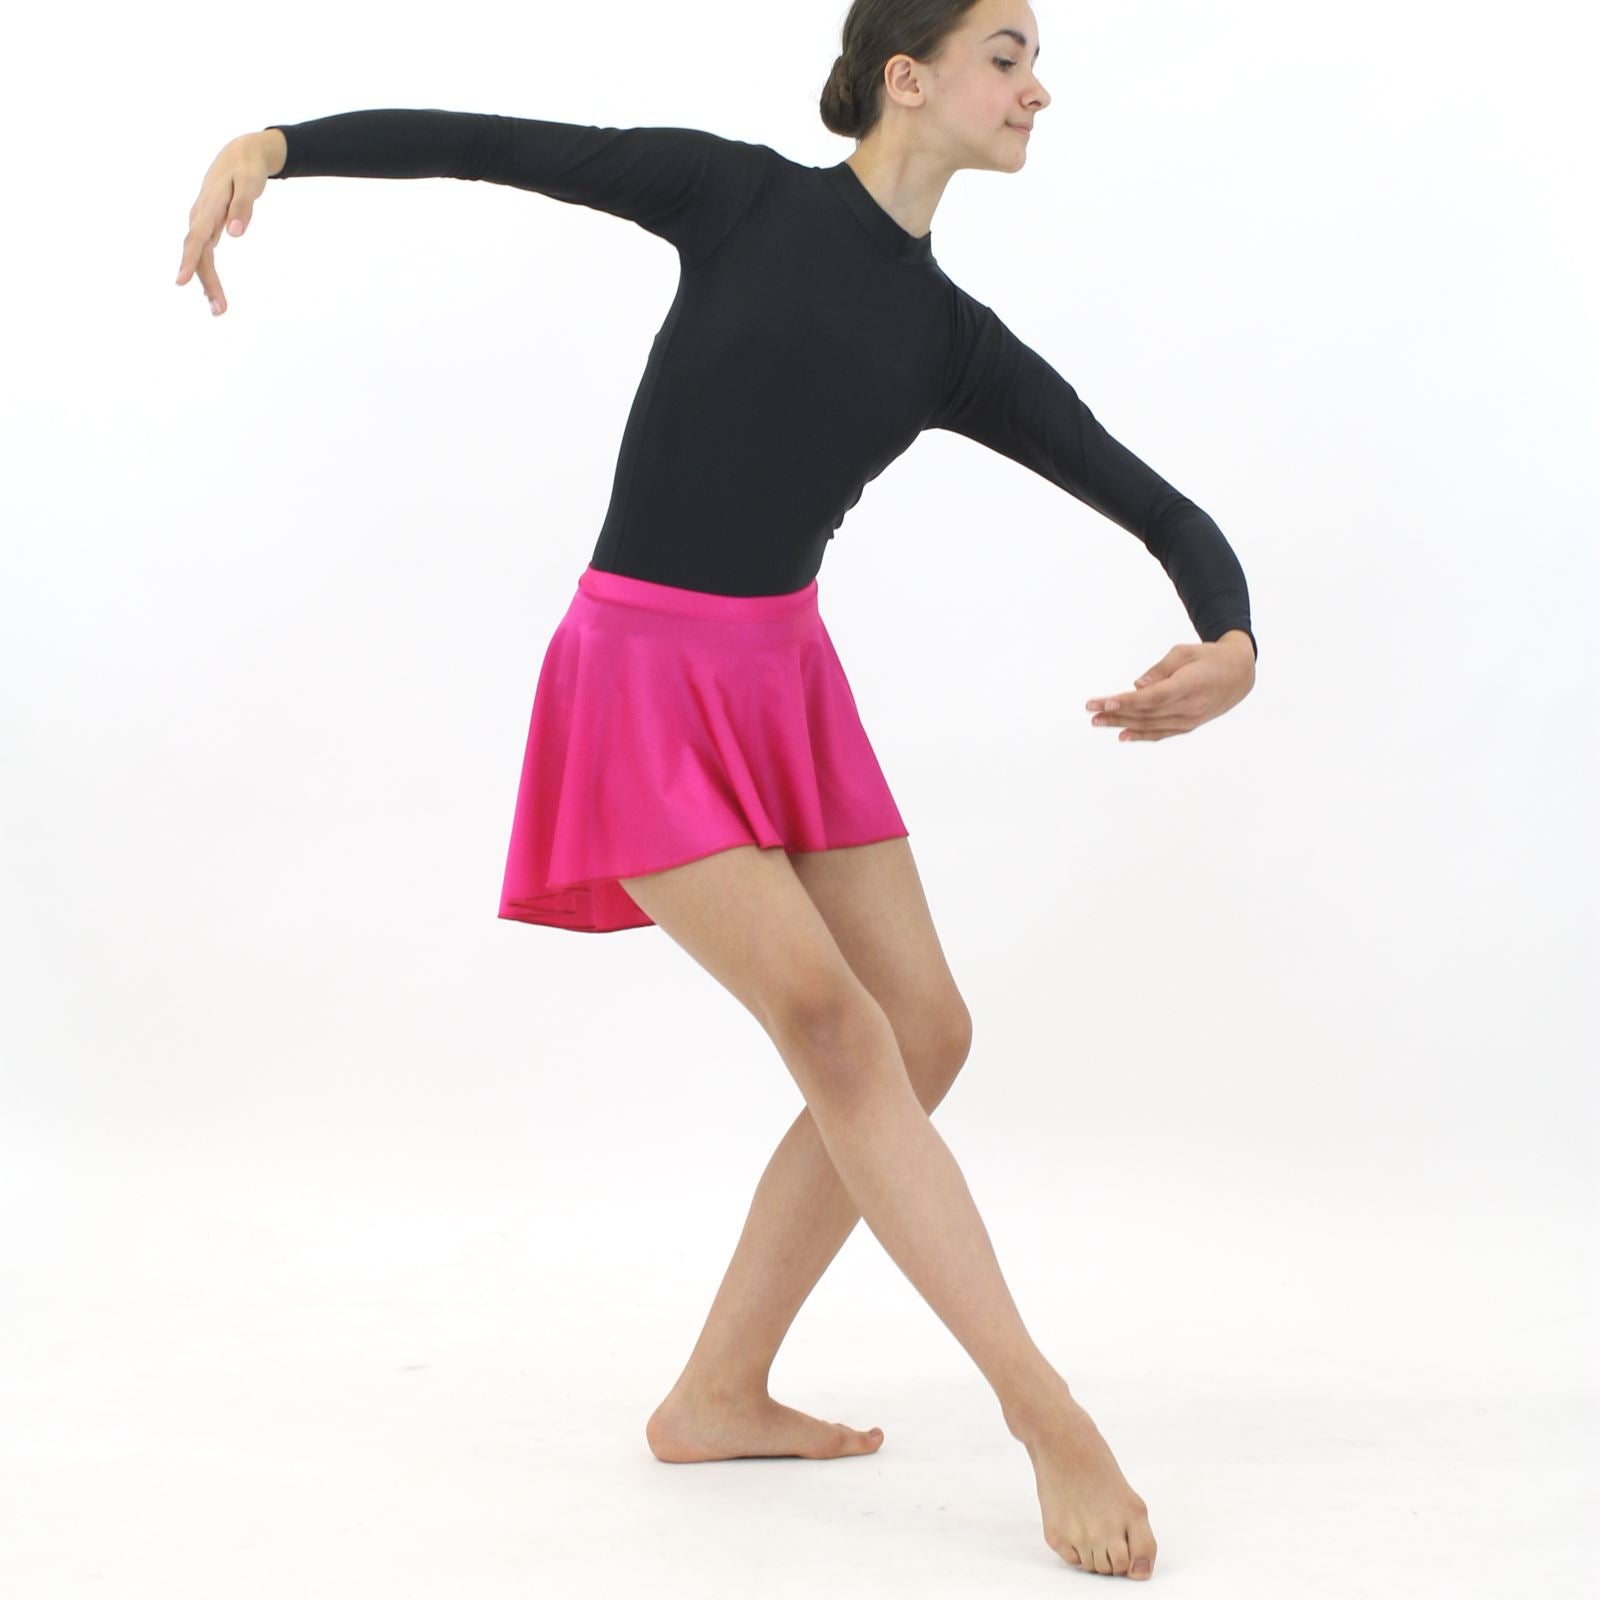 ALICE - SHORTER TAPERED SKIRT Dancewear Dancers World Cerise Small Child 